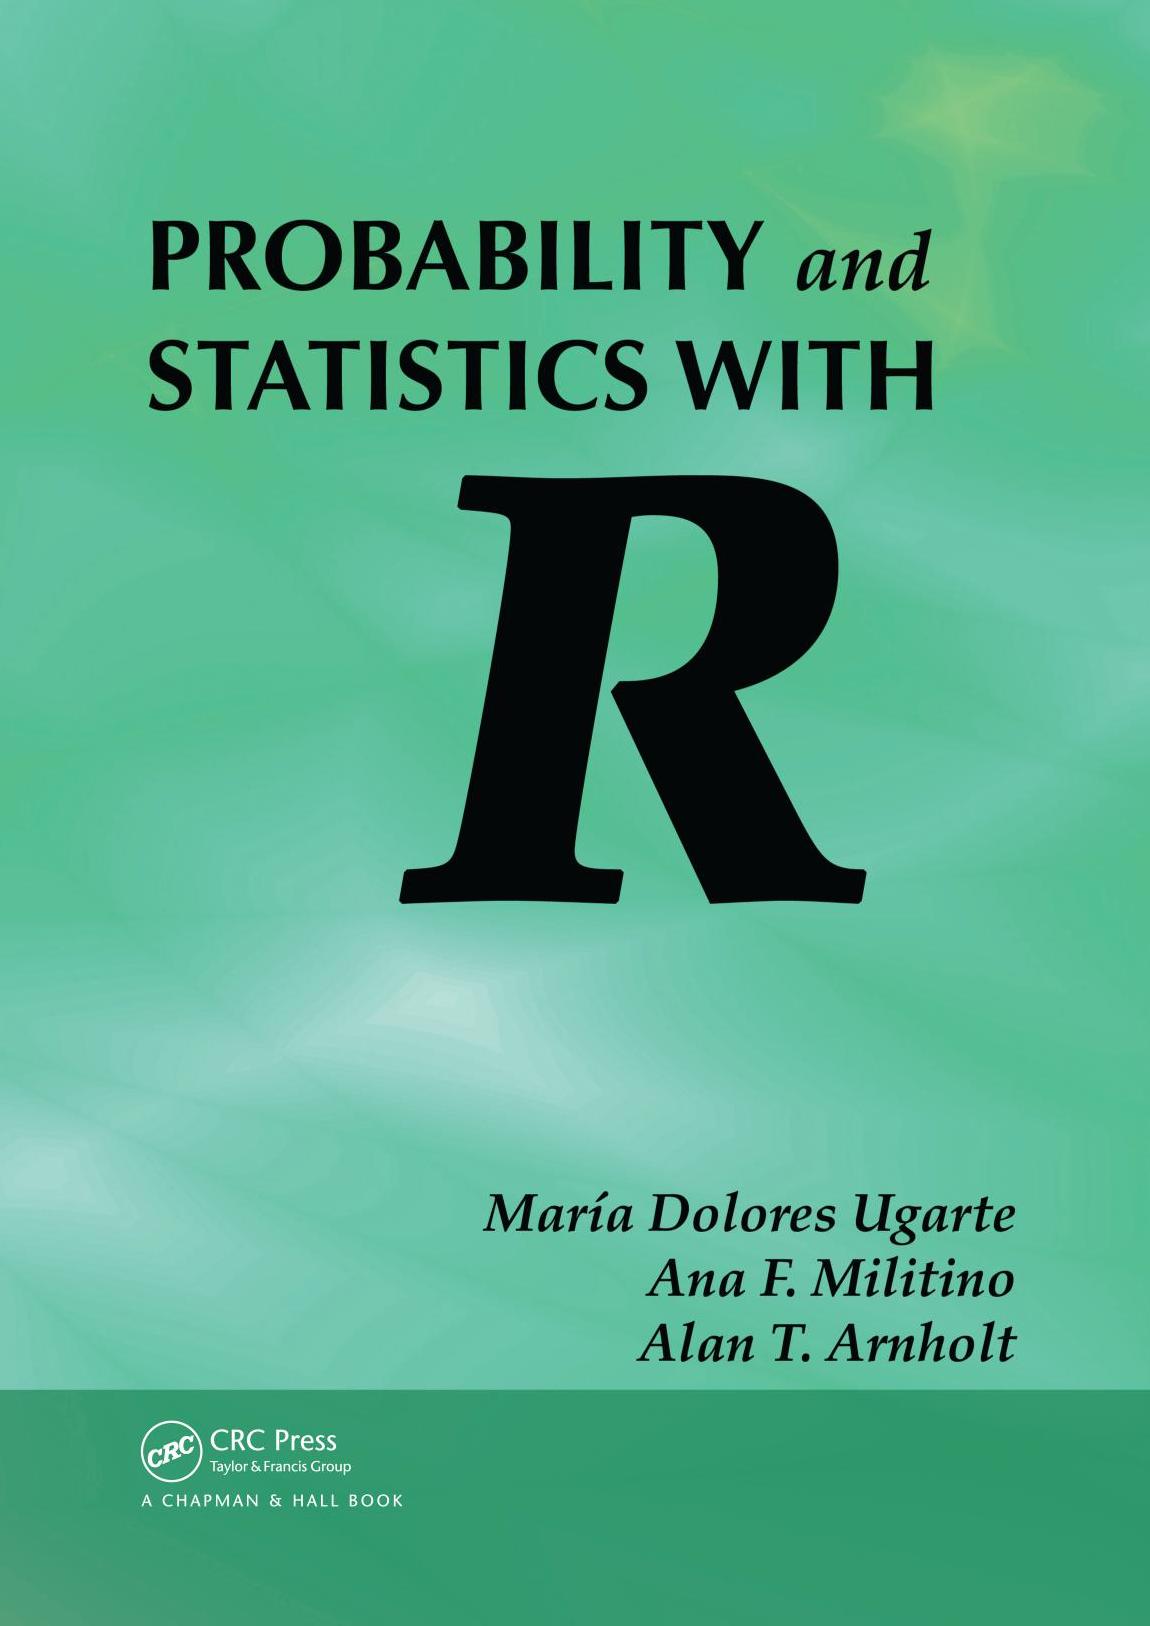 Statistics and Probability with R [Maria Dolores Ugarte, Ana F. Militino, Alan T. Ar(z-lib.org)